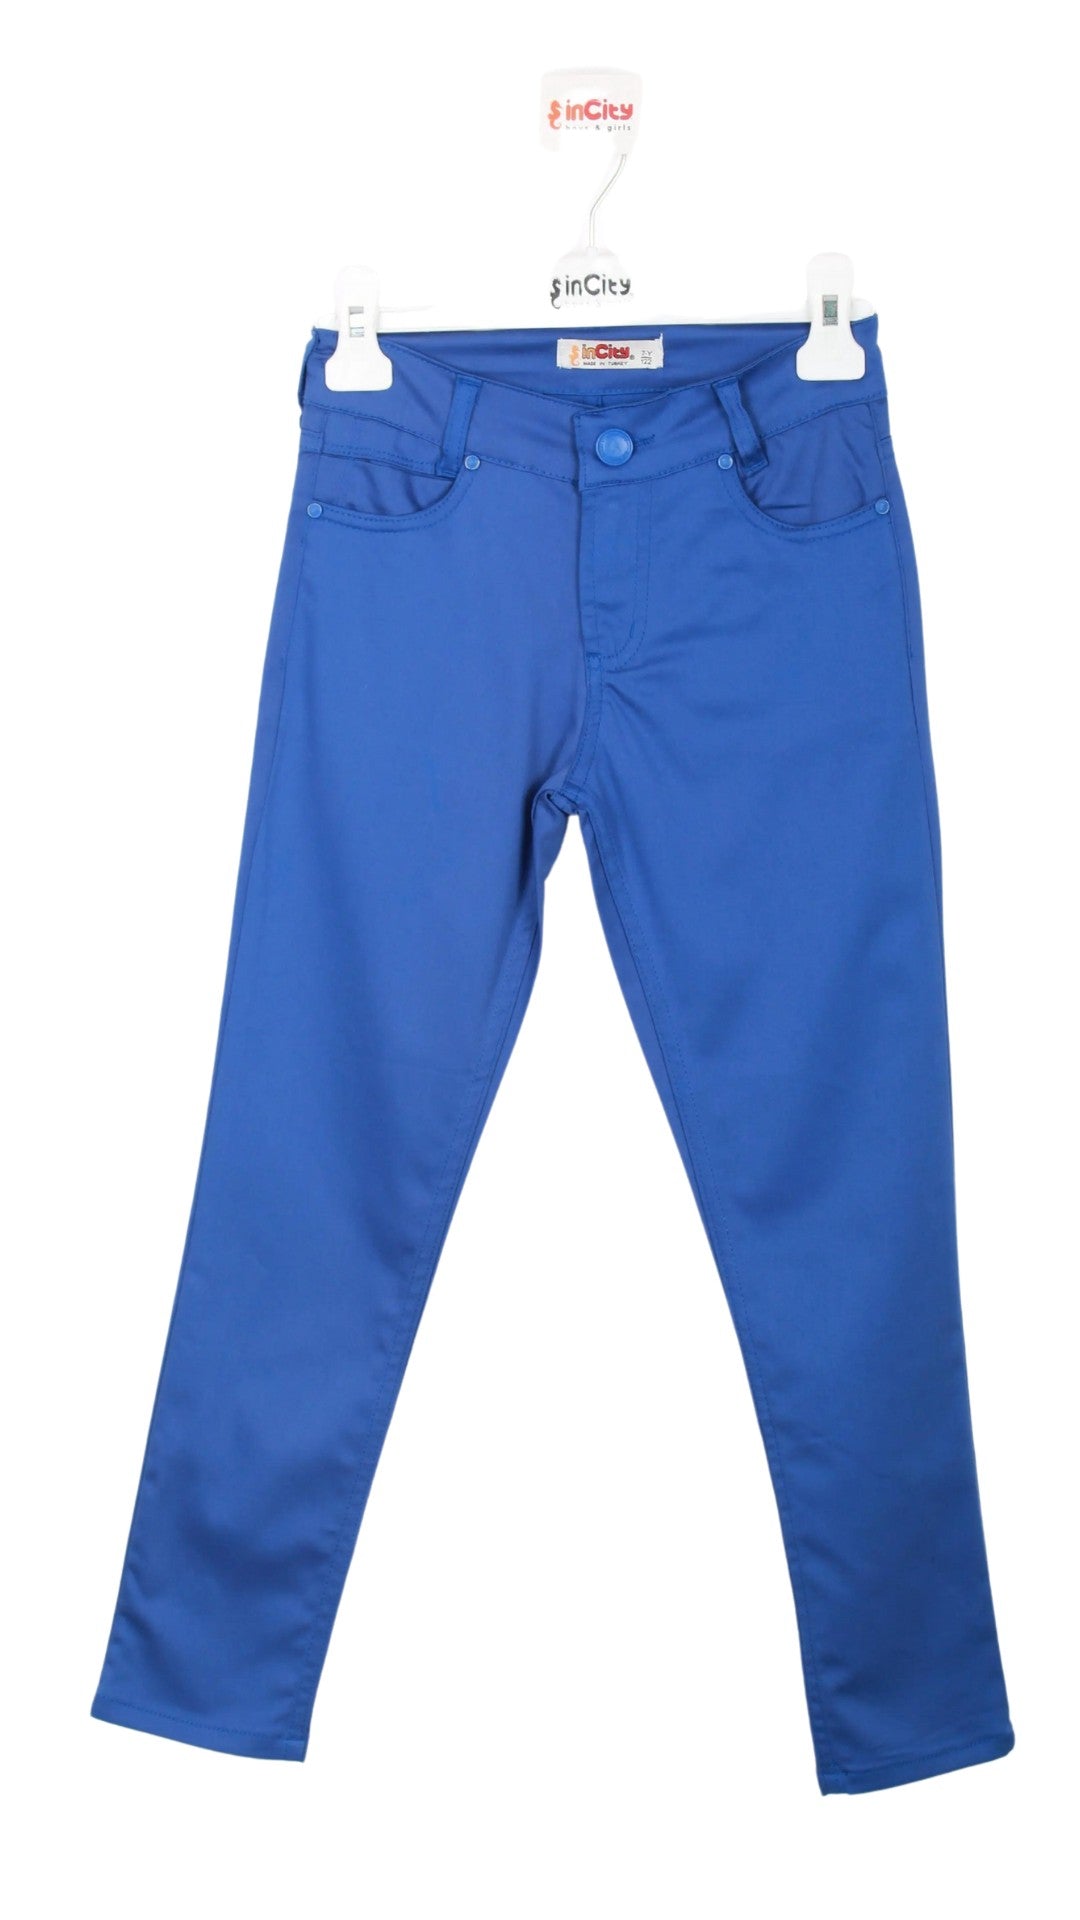 InCity Boys Tween 7-14 Years Mid-Rise Blue Cotton Plass Dress Pants InCity Boys & Girls